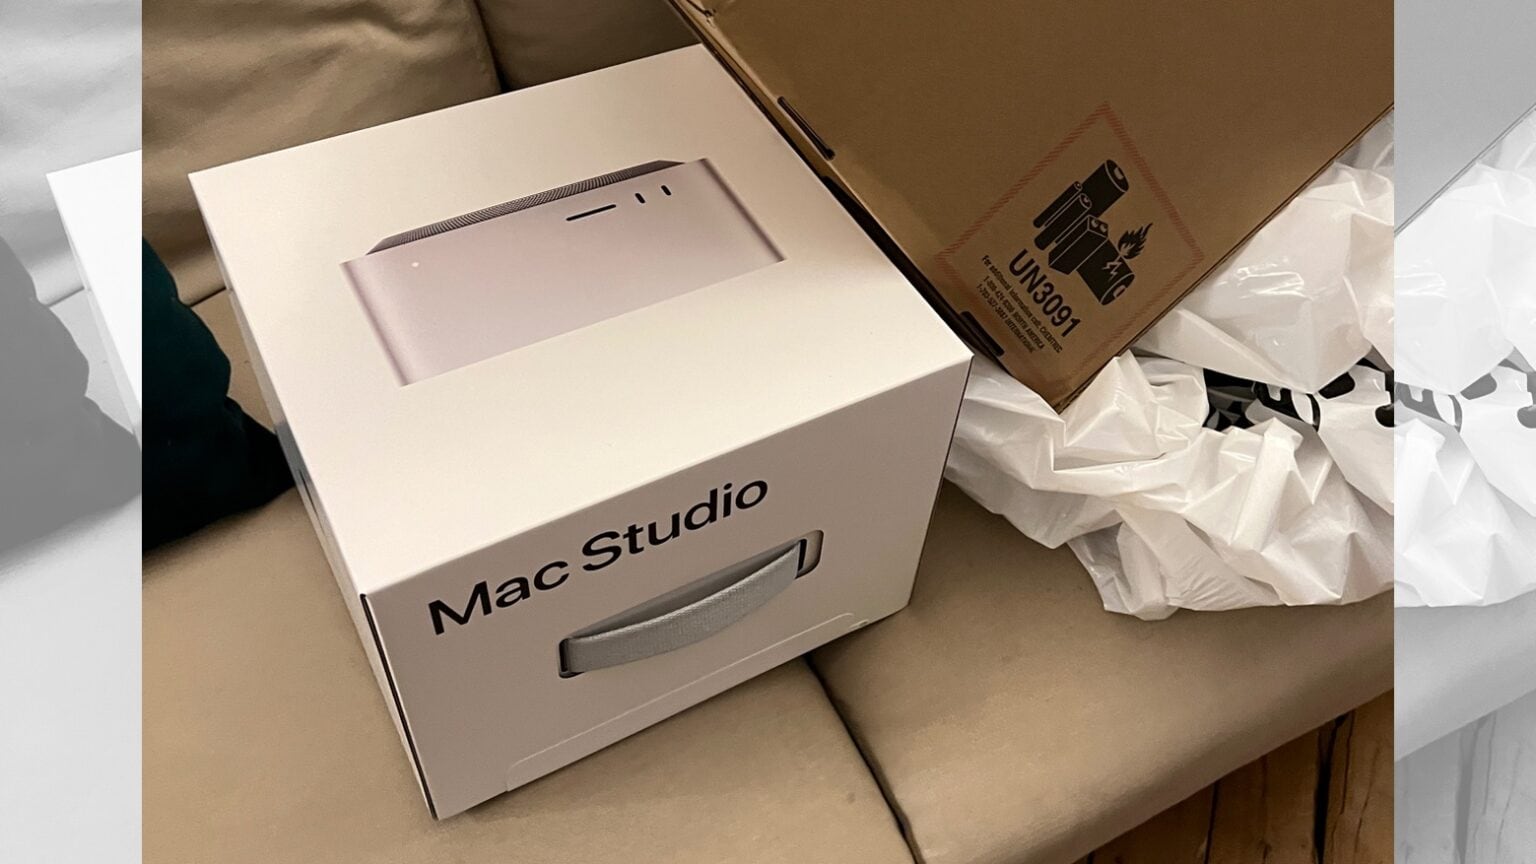 Lucky shopper receives Mac Studio days early